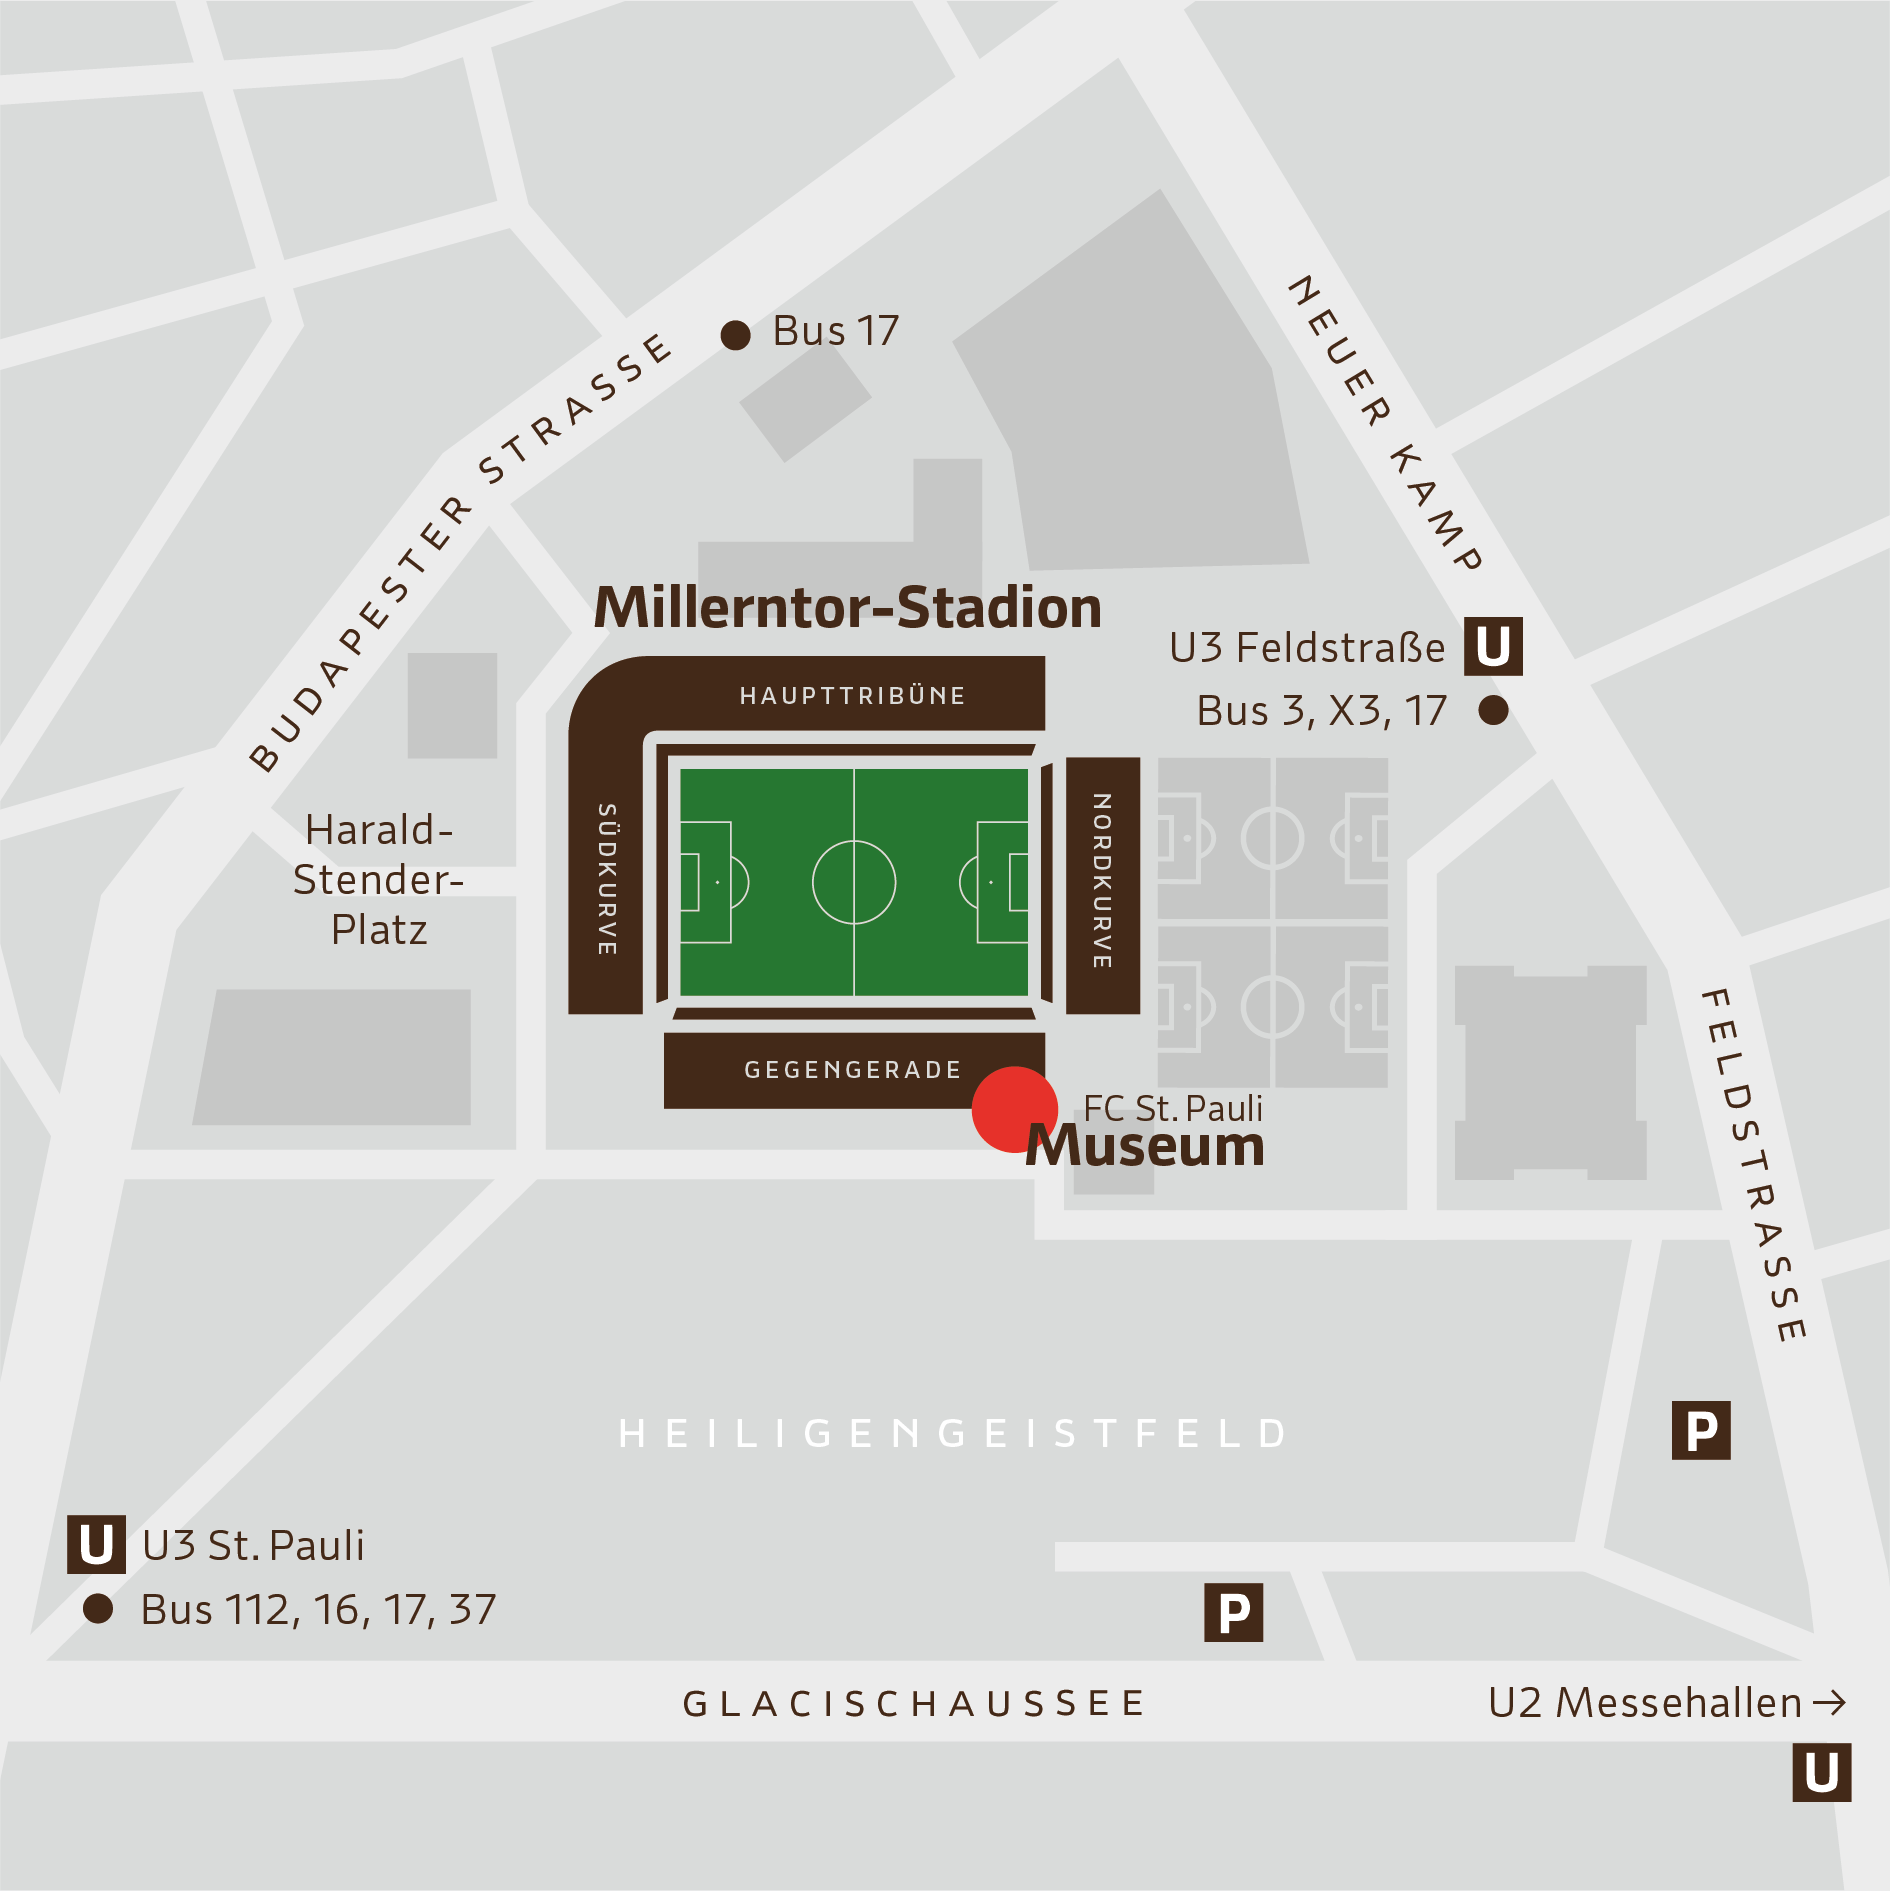 Hier liegt die Fläche des FC St. Pauli-Museums